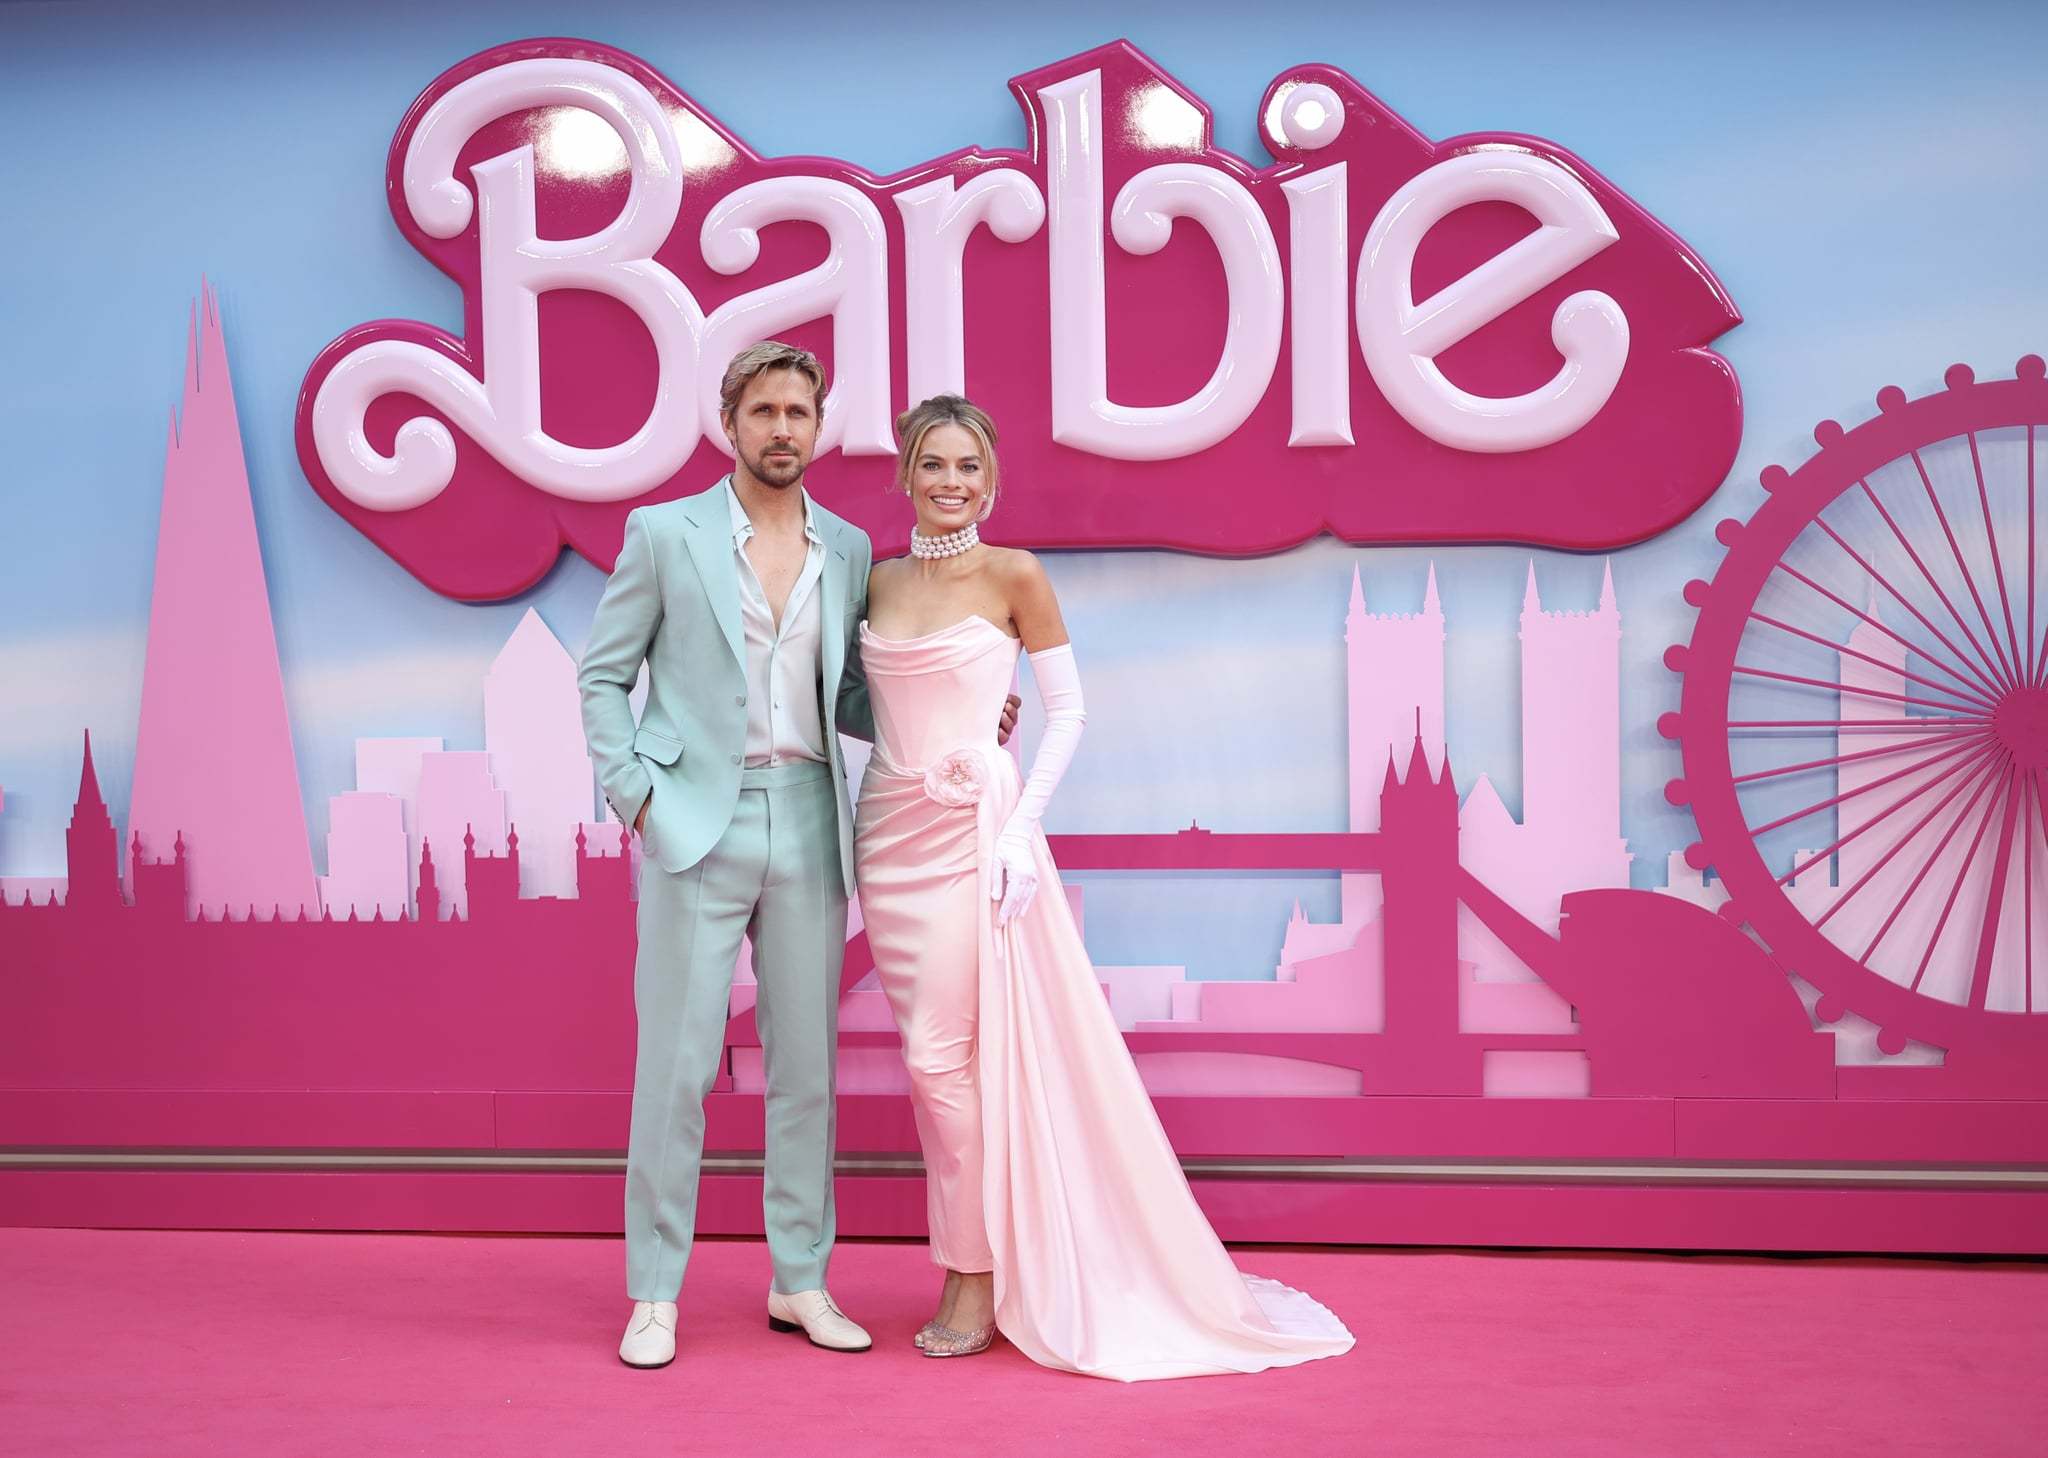 LONDON, ENGLAND - JULY 12: Ryan Gosling and Margot Robbie attend "Barbie" premiere 